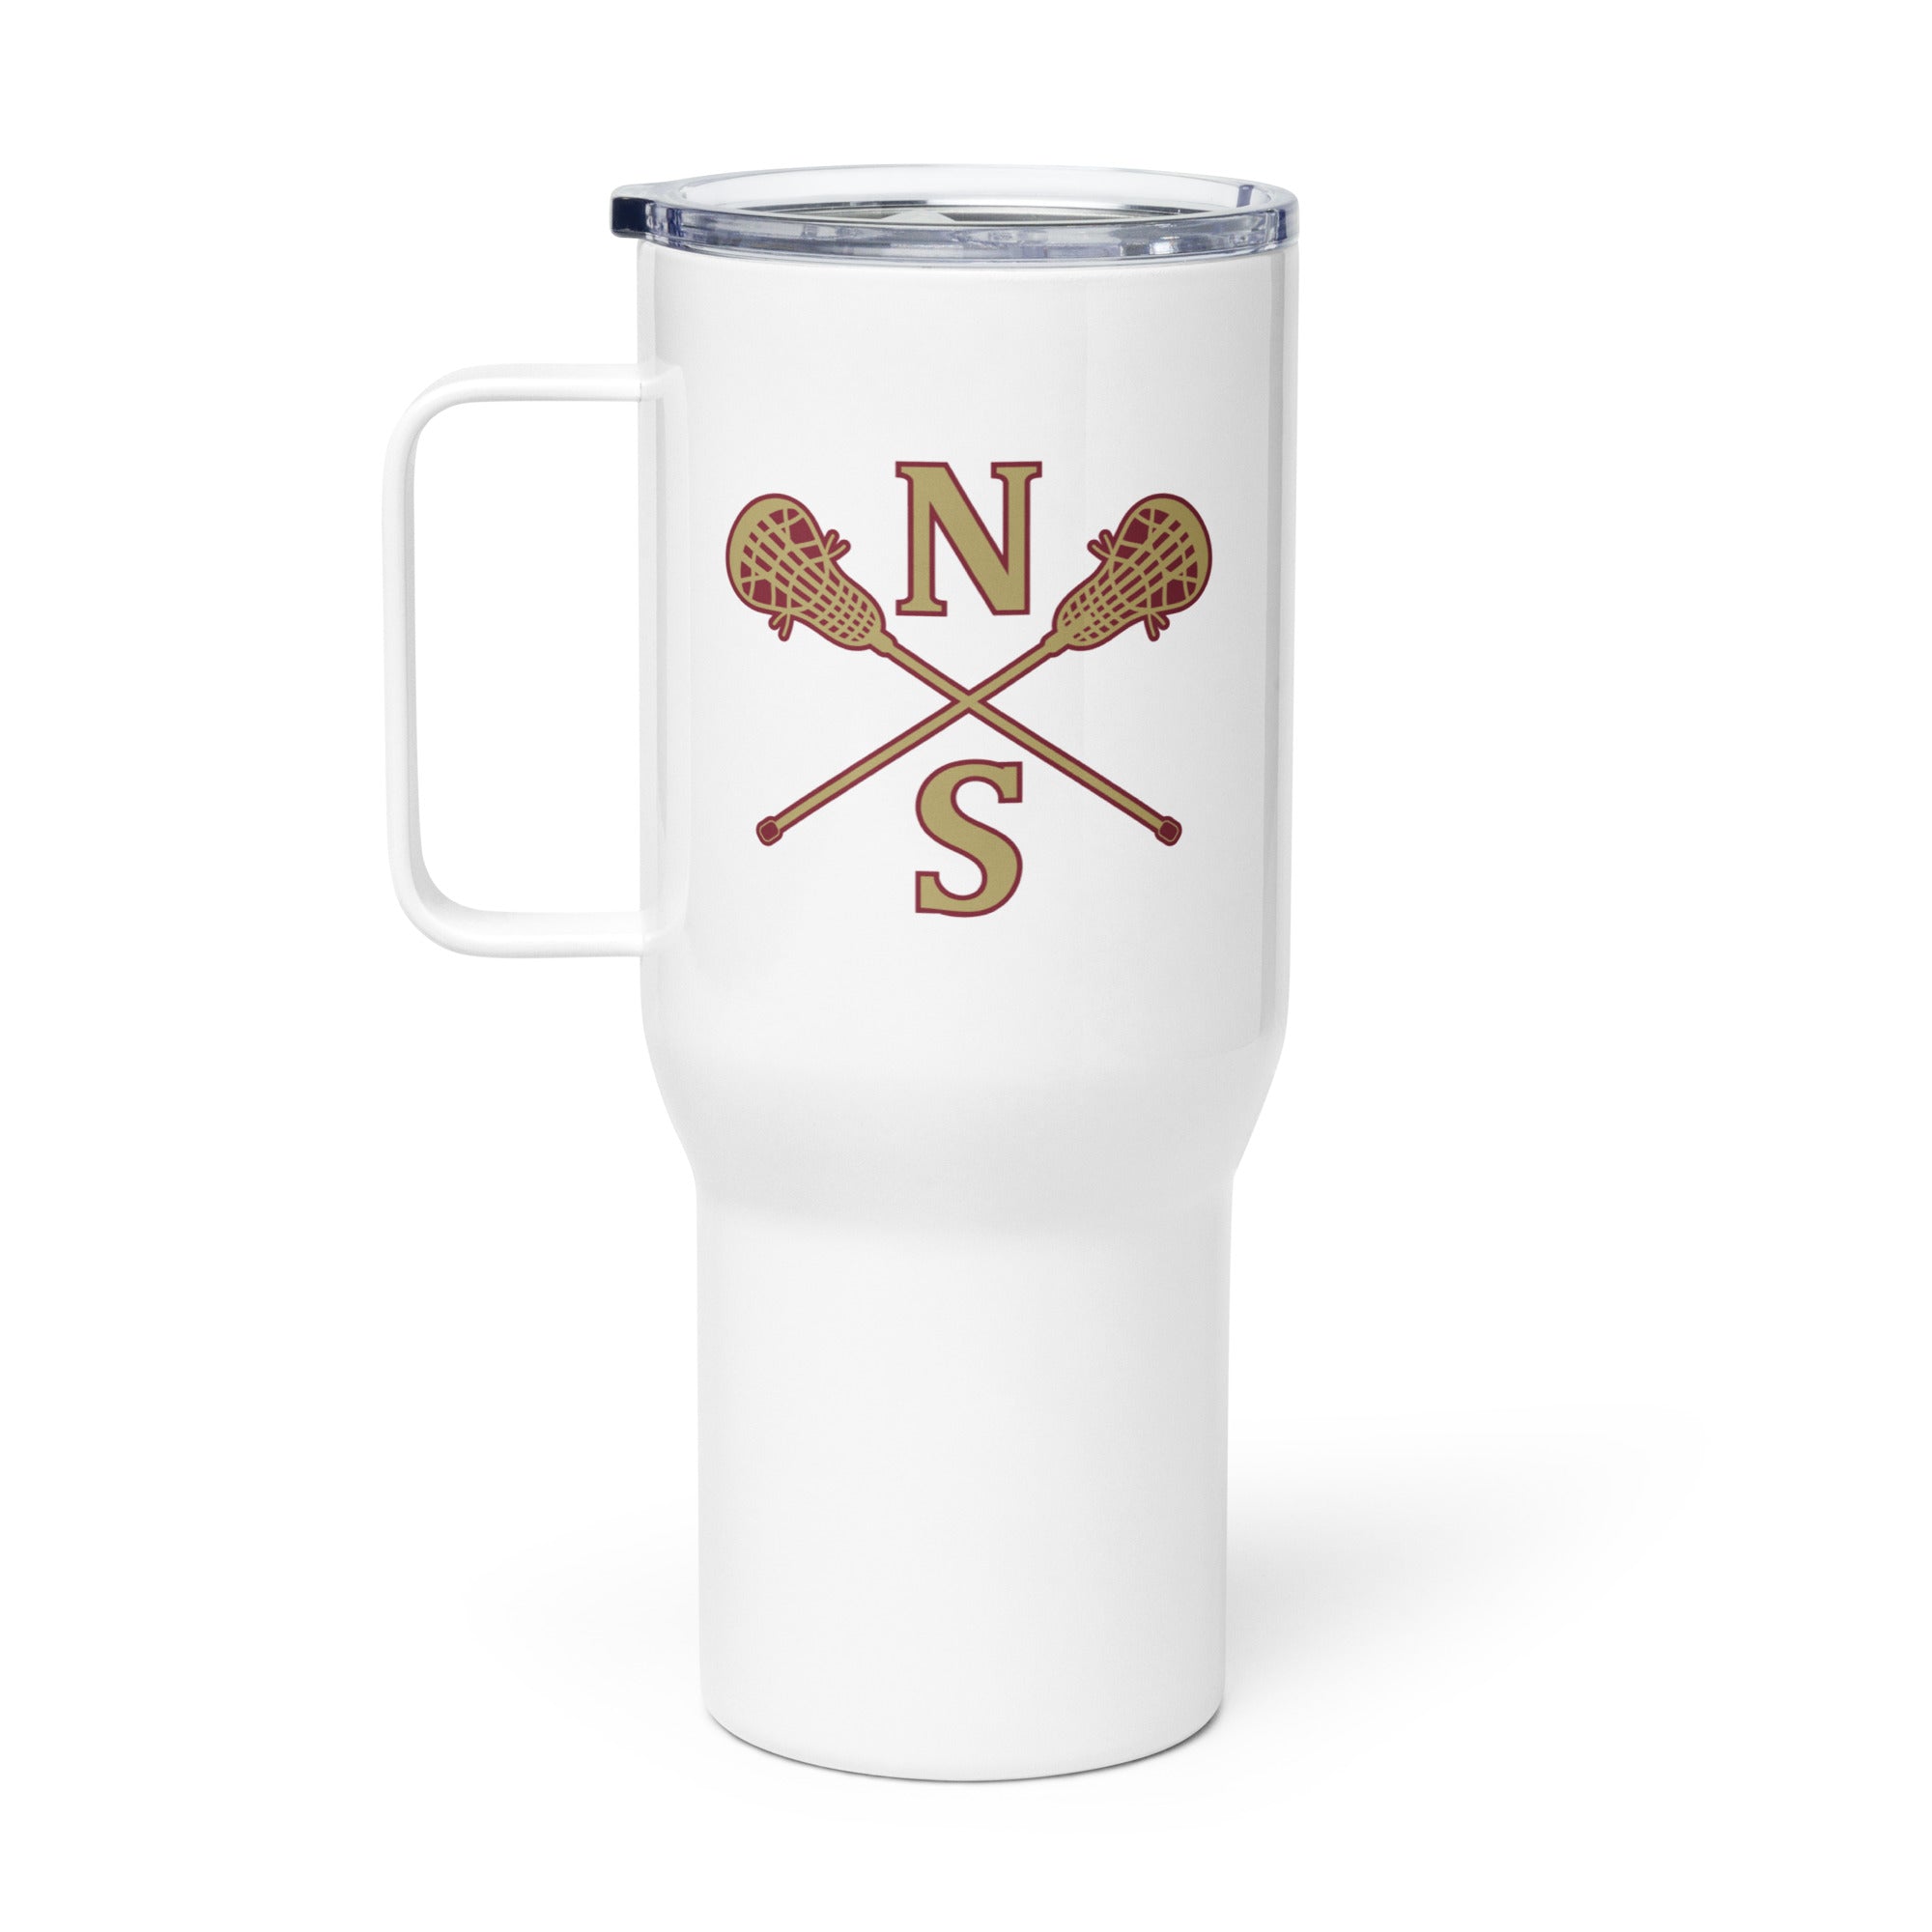 N-S Travel mug with a handle (GIRLS LOGO)